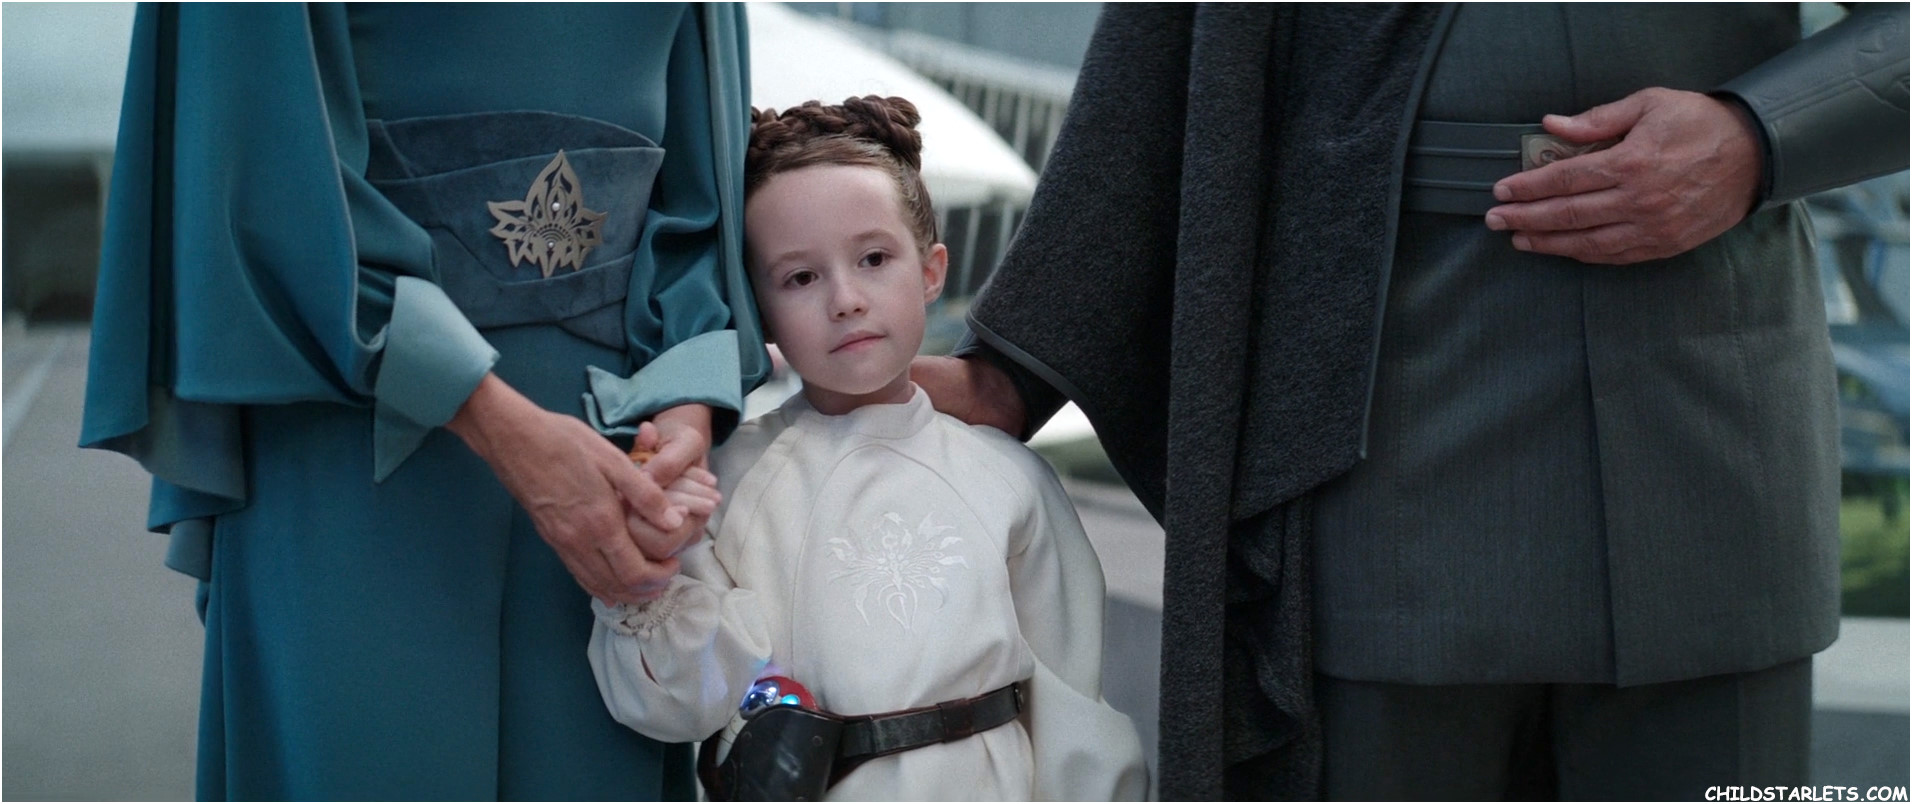 Vivien Lyra Blair
"Obi-Wan Kenobi" - 2022/HD
"Part 6"